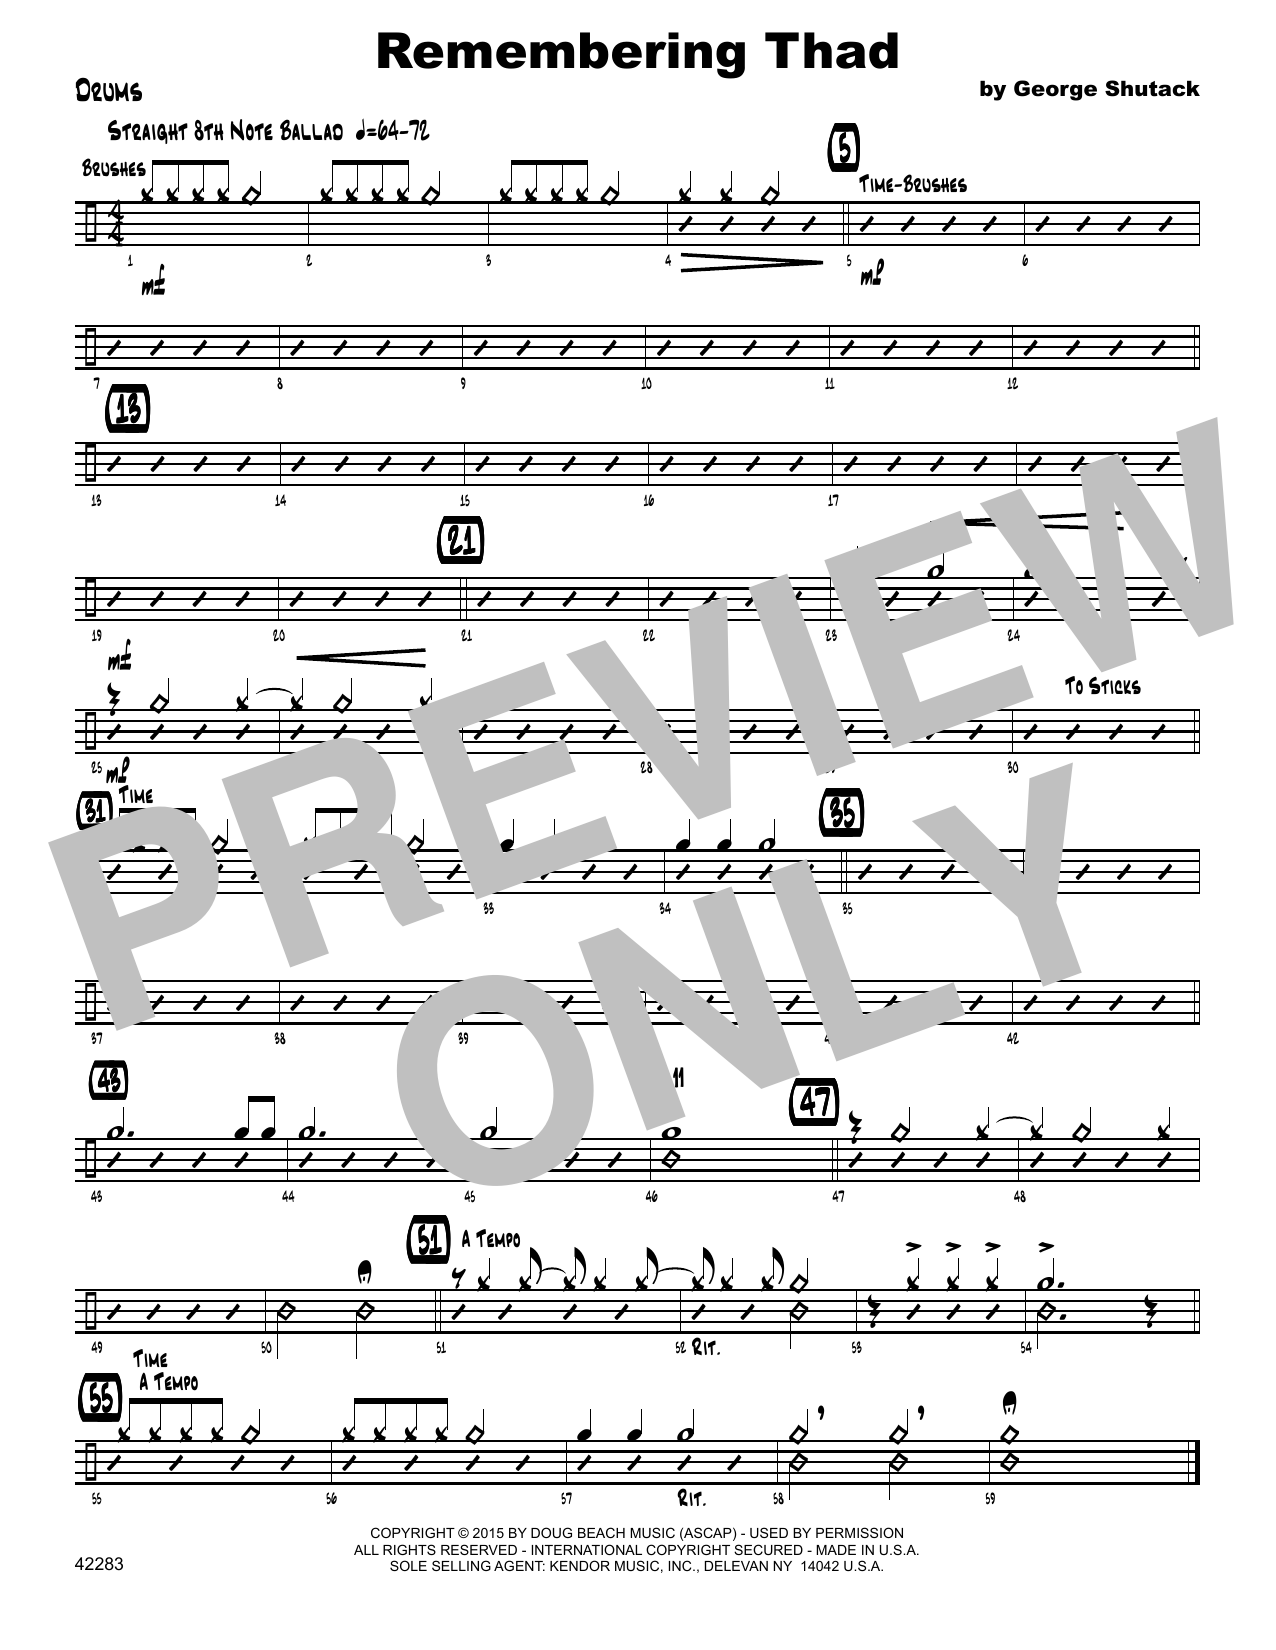 Download George Shutack Remembering Thad - Drum Set Sheet Music